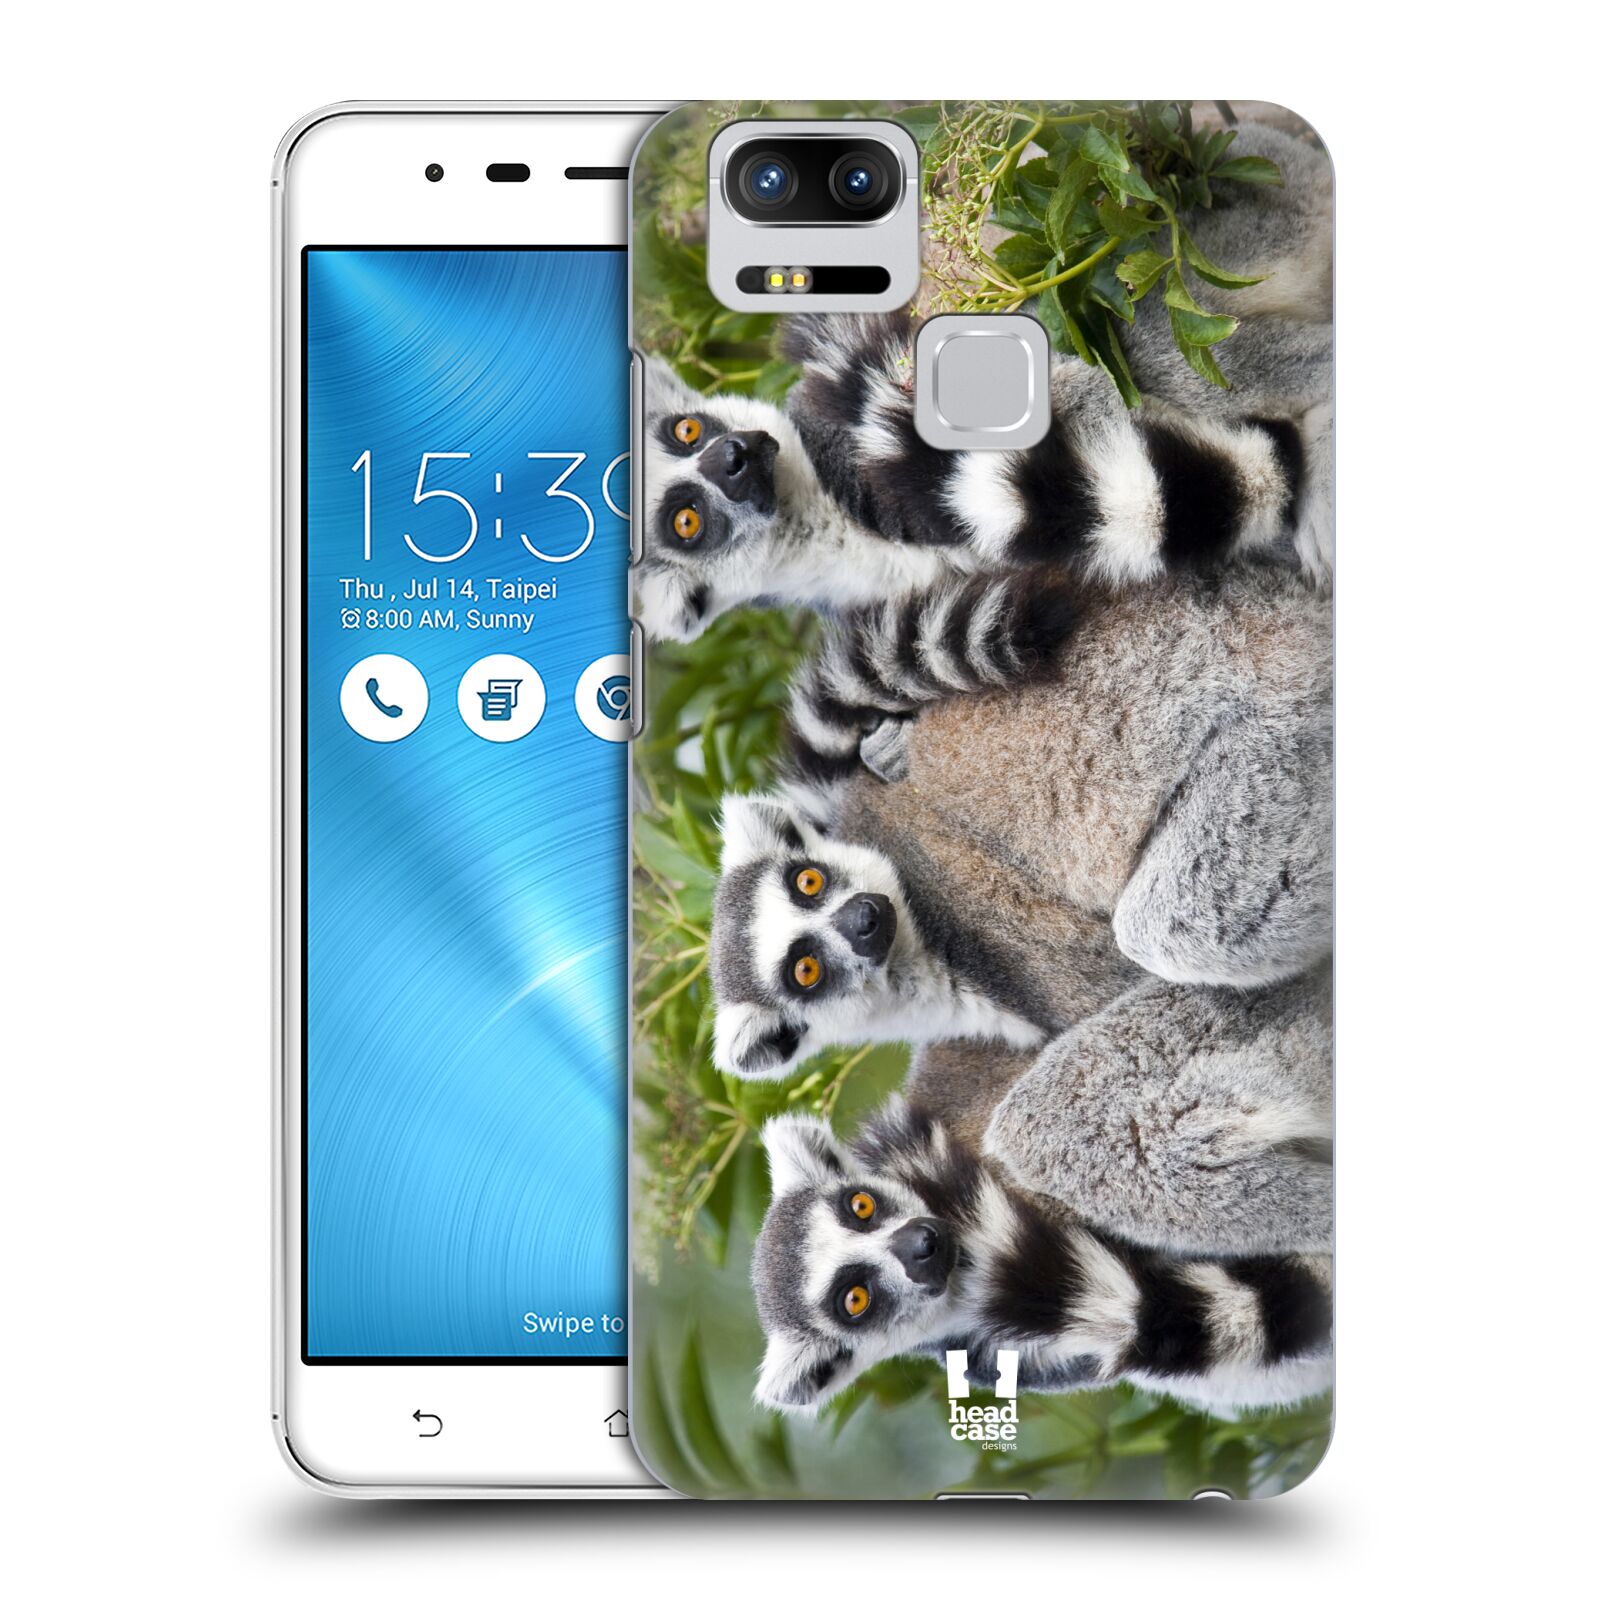 HEAD CASE plastový obal na mobil Asus Zenfone 3 Zoom ZE553KL vzor slavná zvířata foto lemur